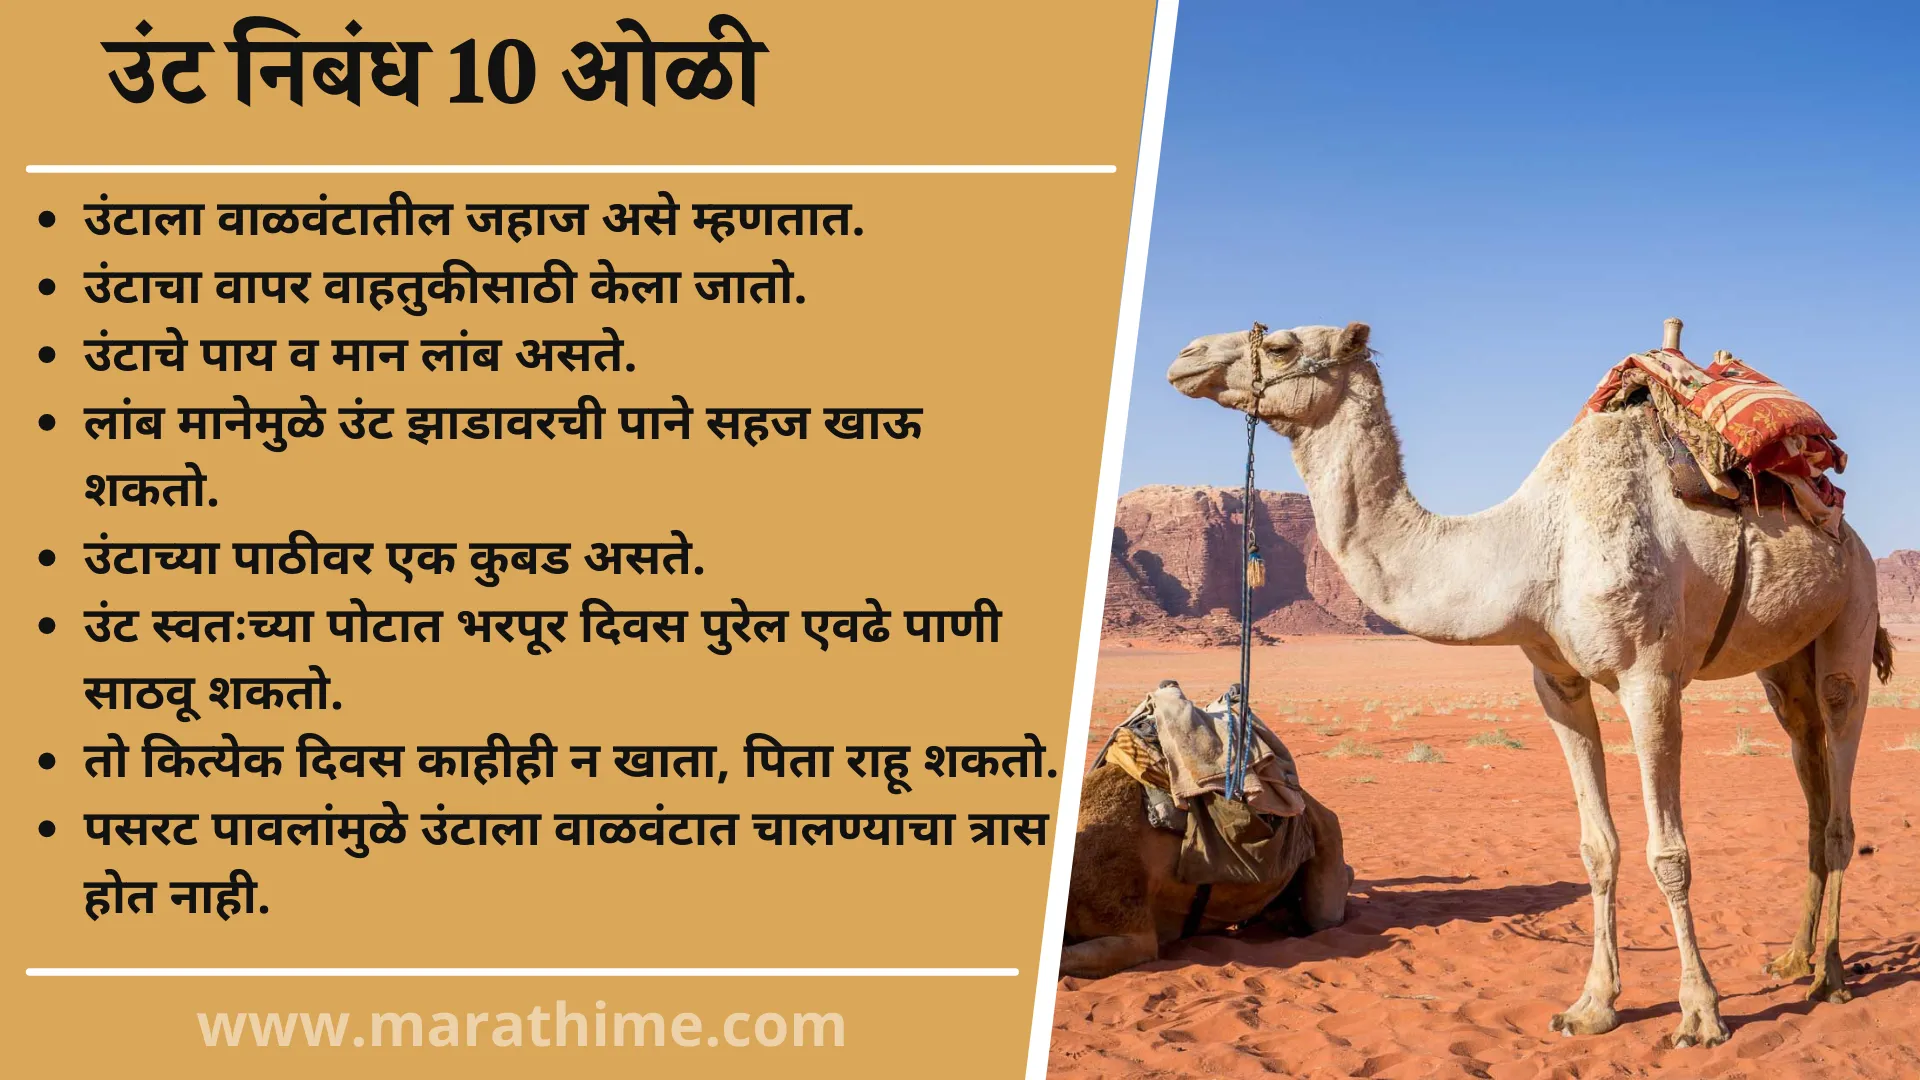 उंट निबंध 10 ओळी, 10 Lines On Camel in Marathi